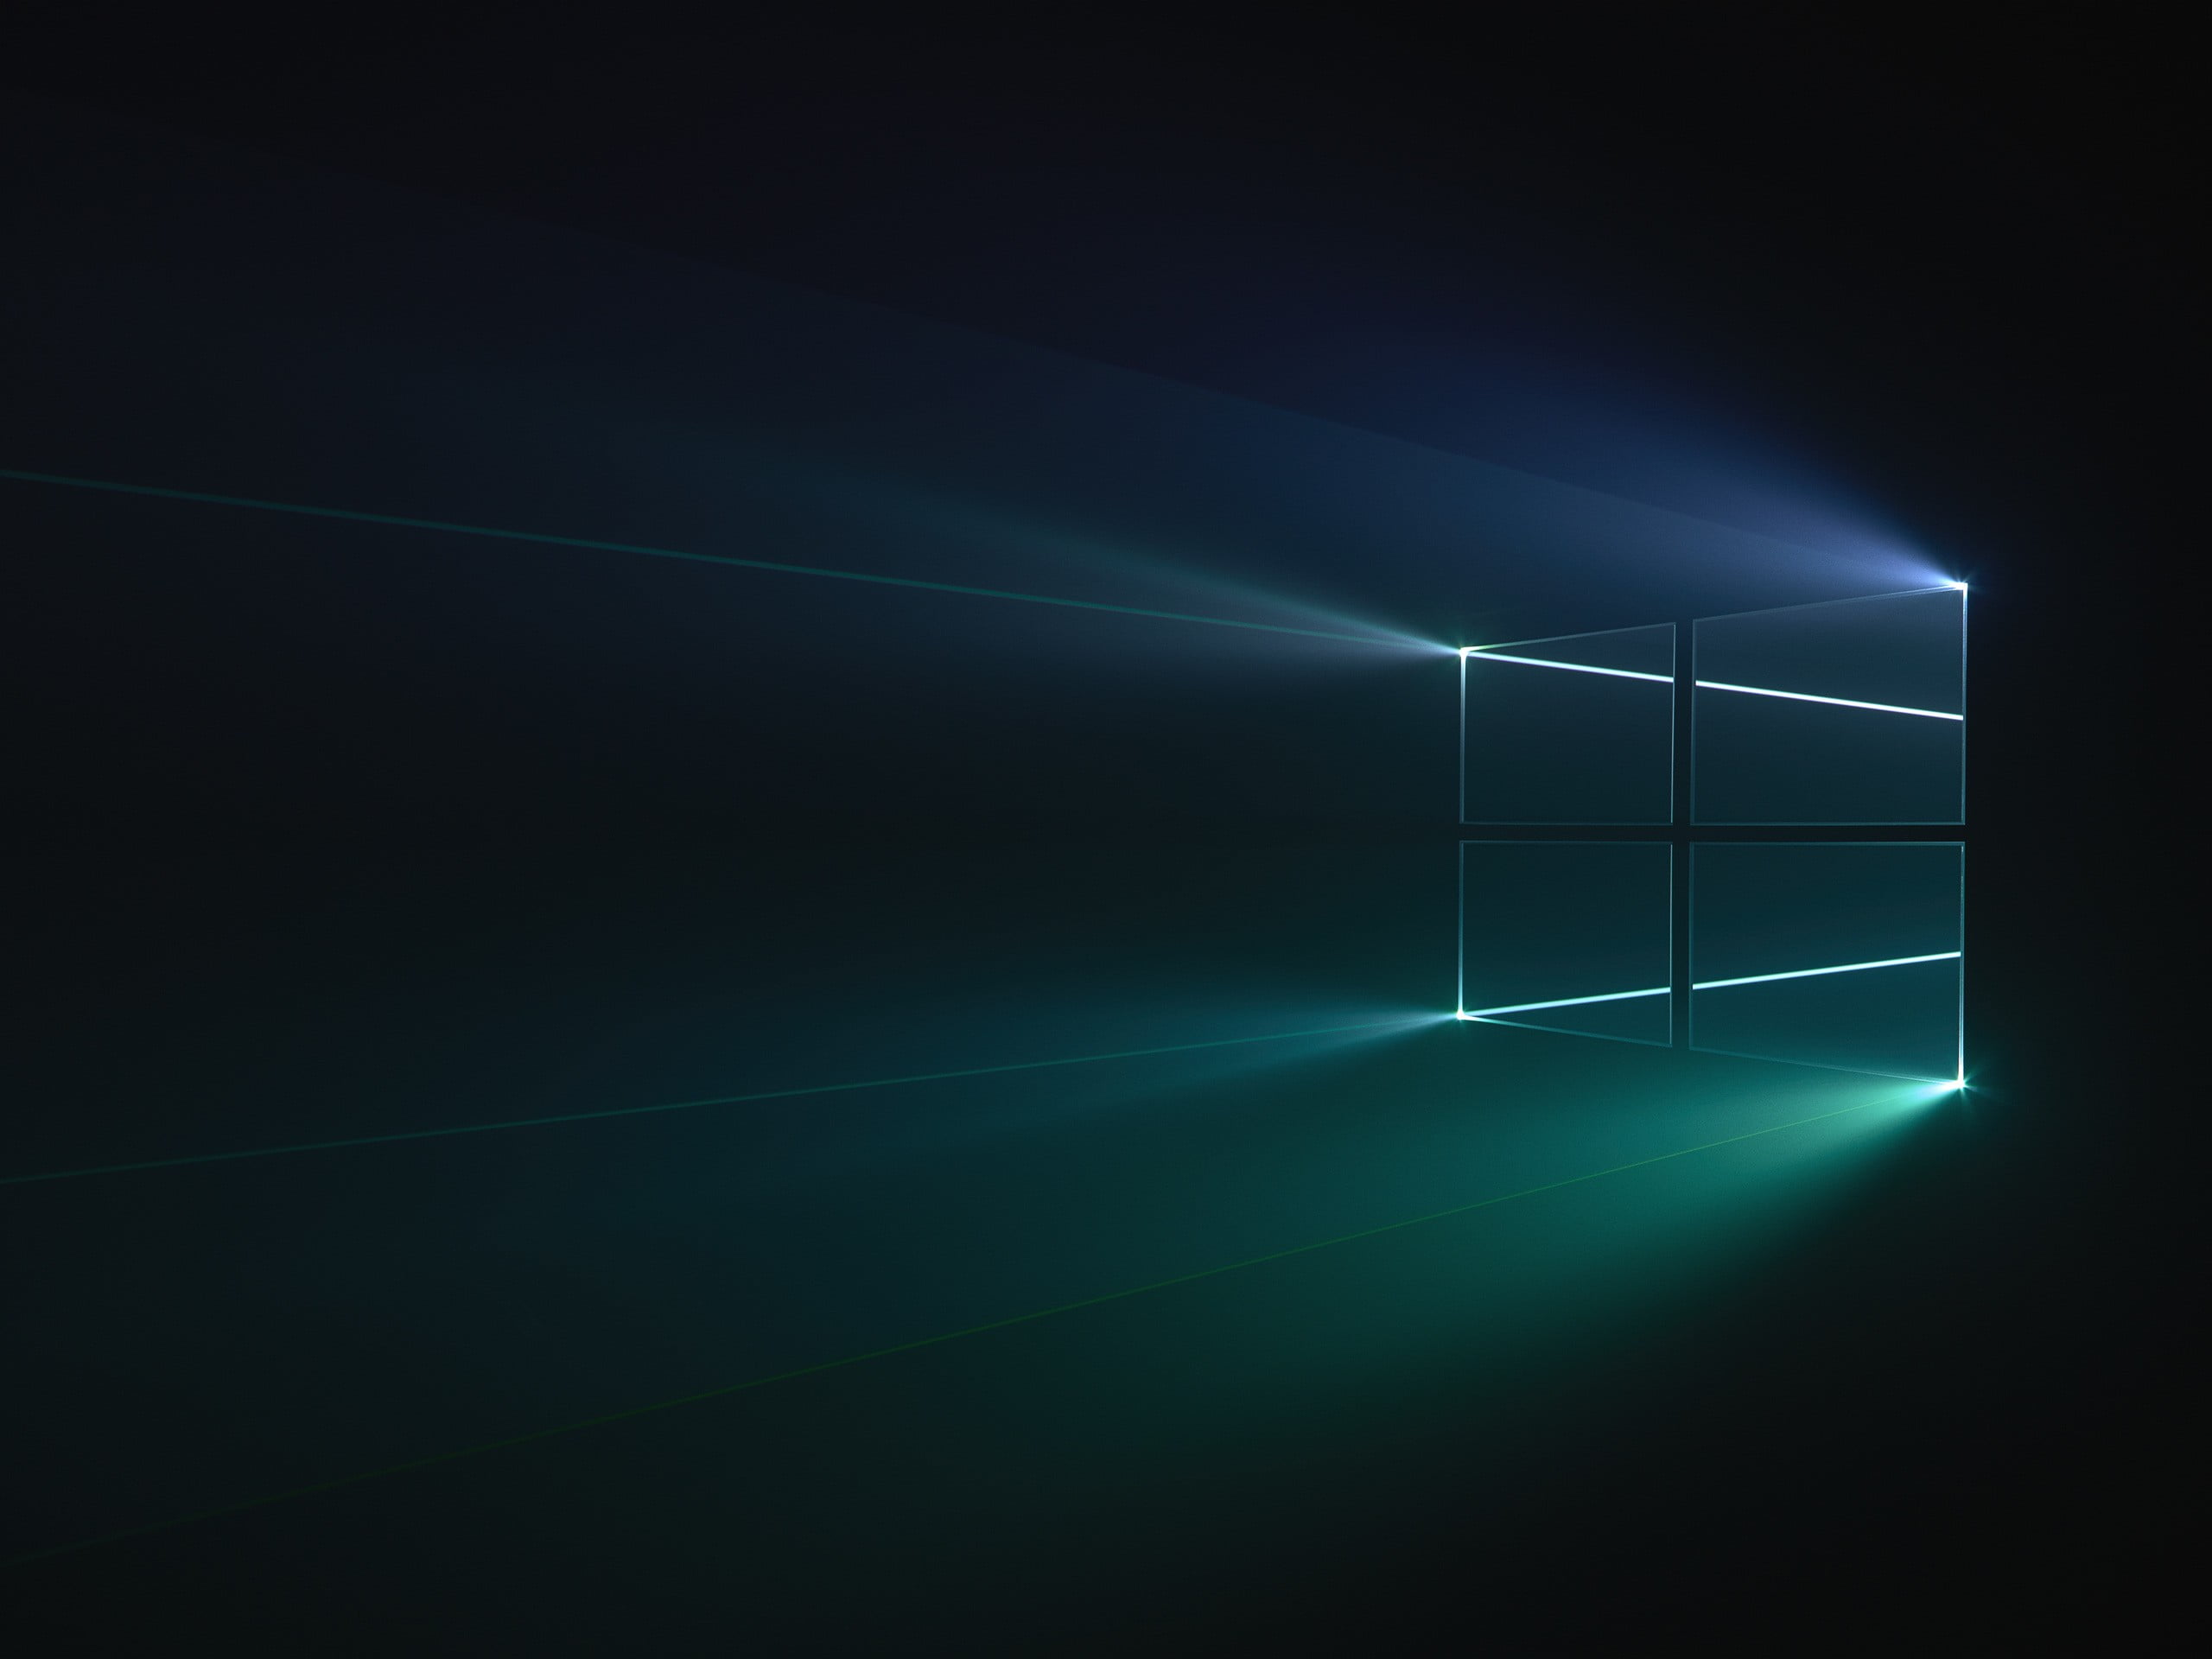 Free download | HD wallpaper: Windows 10, abstract, GMUNK, light ...